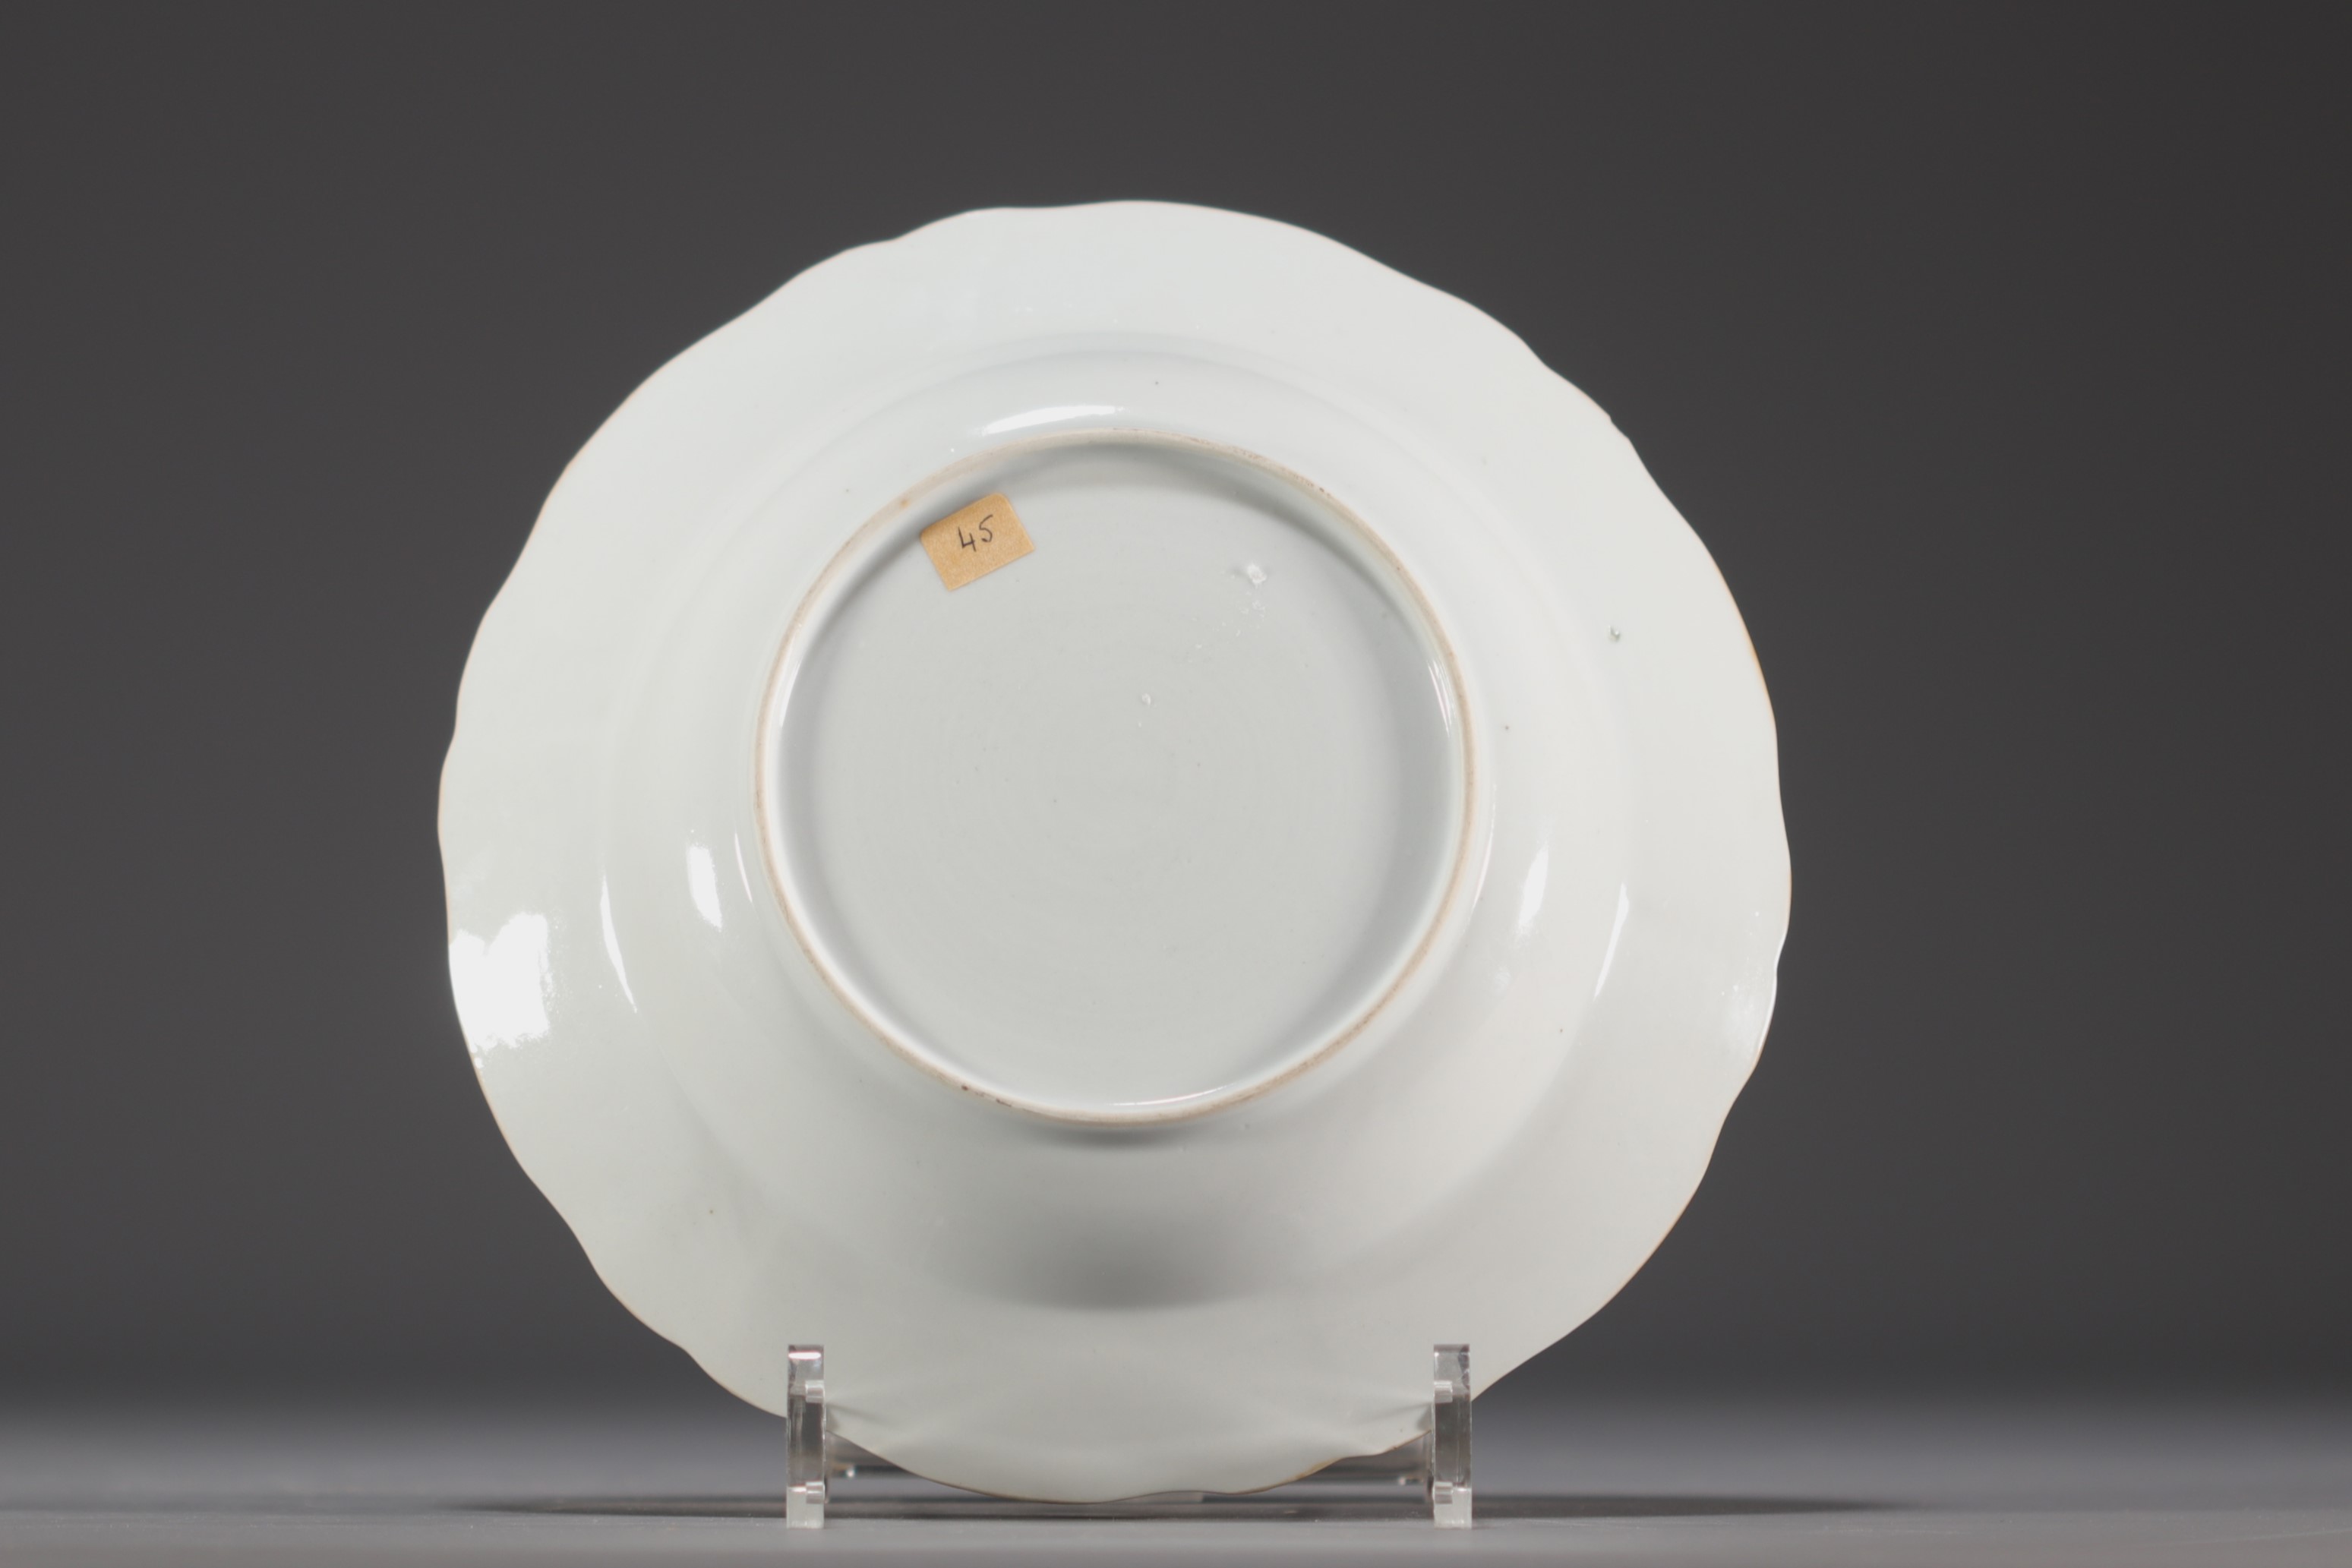 China - Compagnie des Indes porcelain plate. - Image 2 of 2